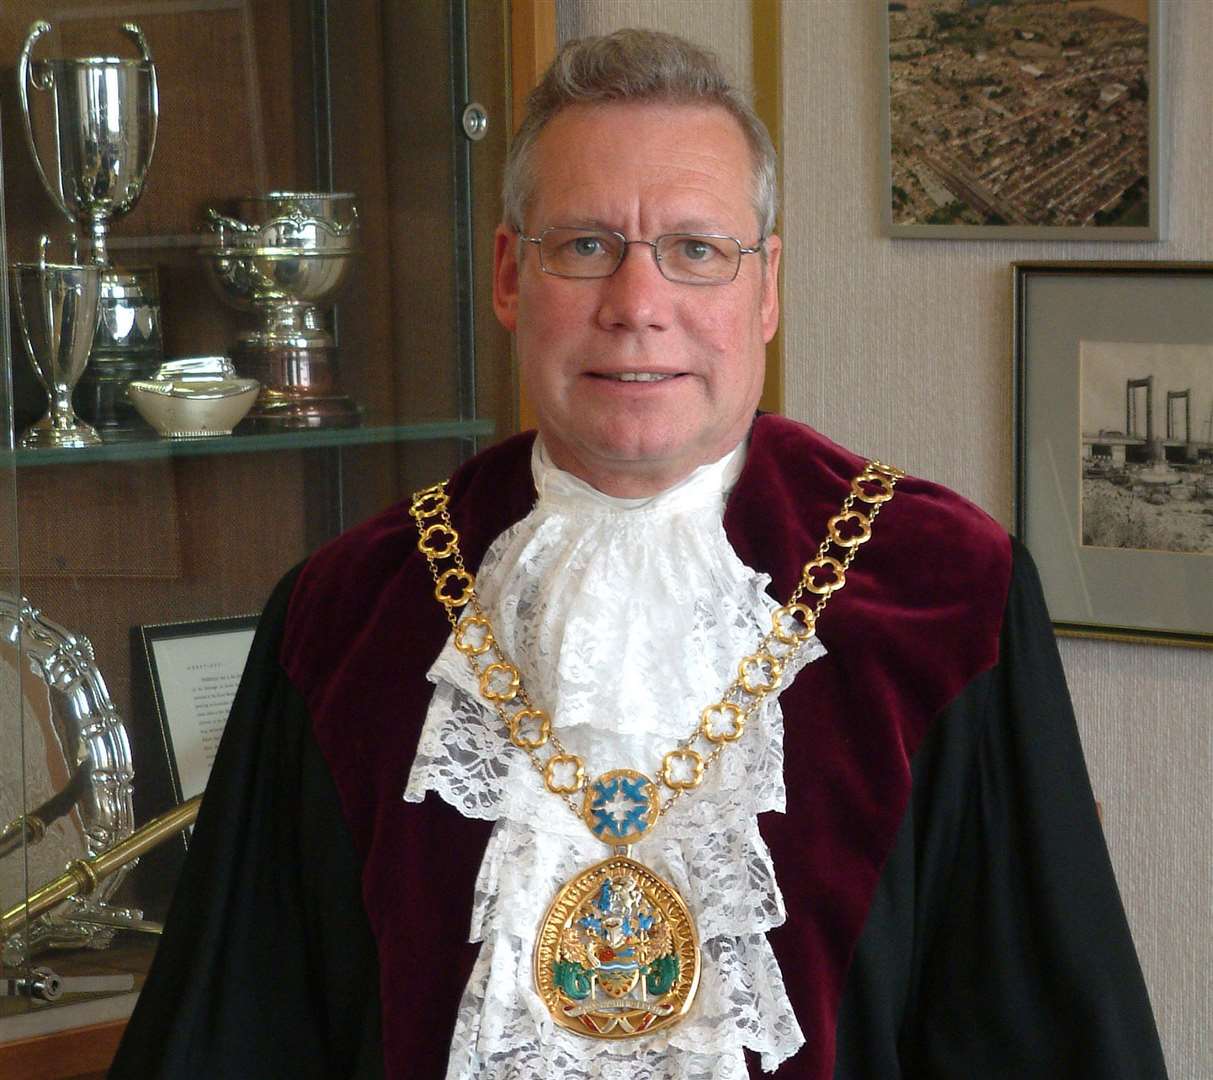 Former Mayor of Swale Bryan Mulhern